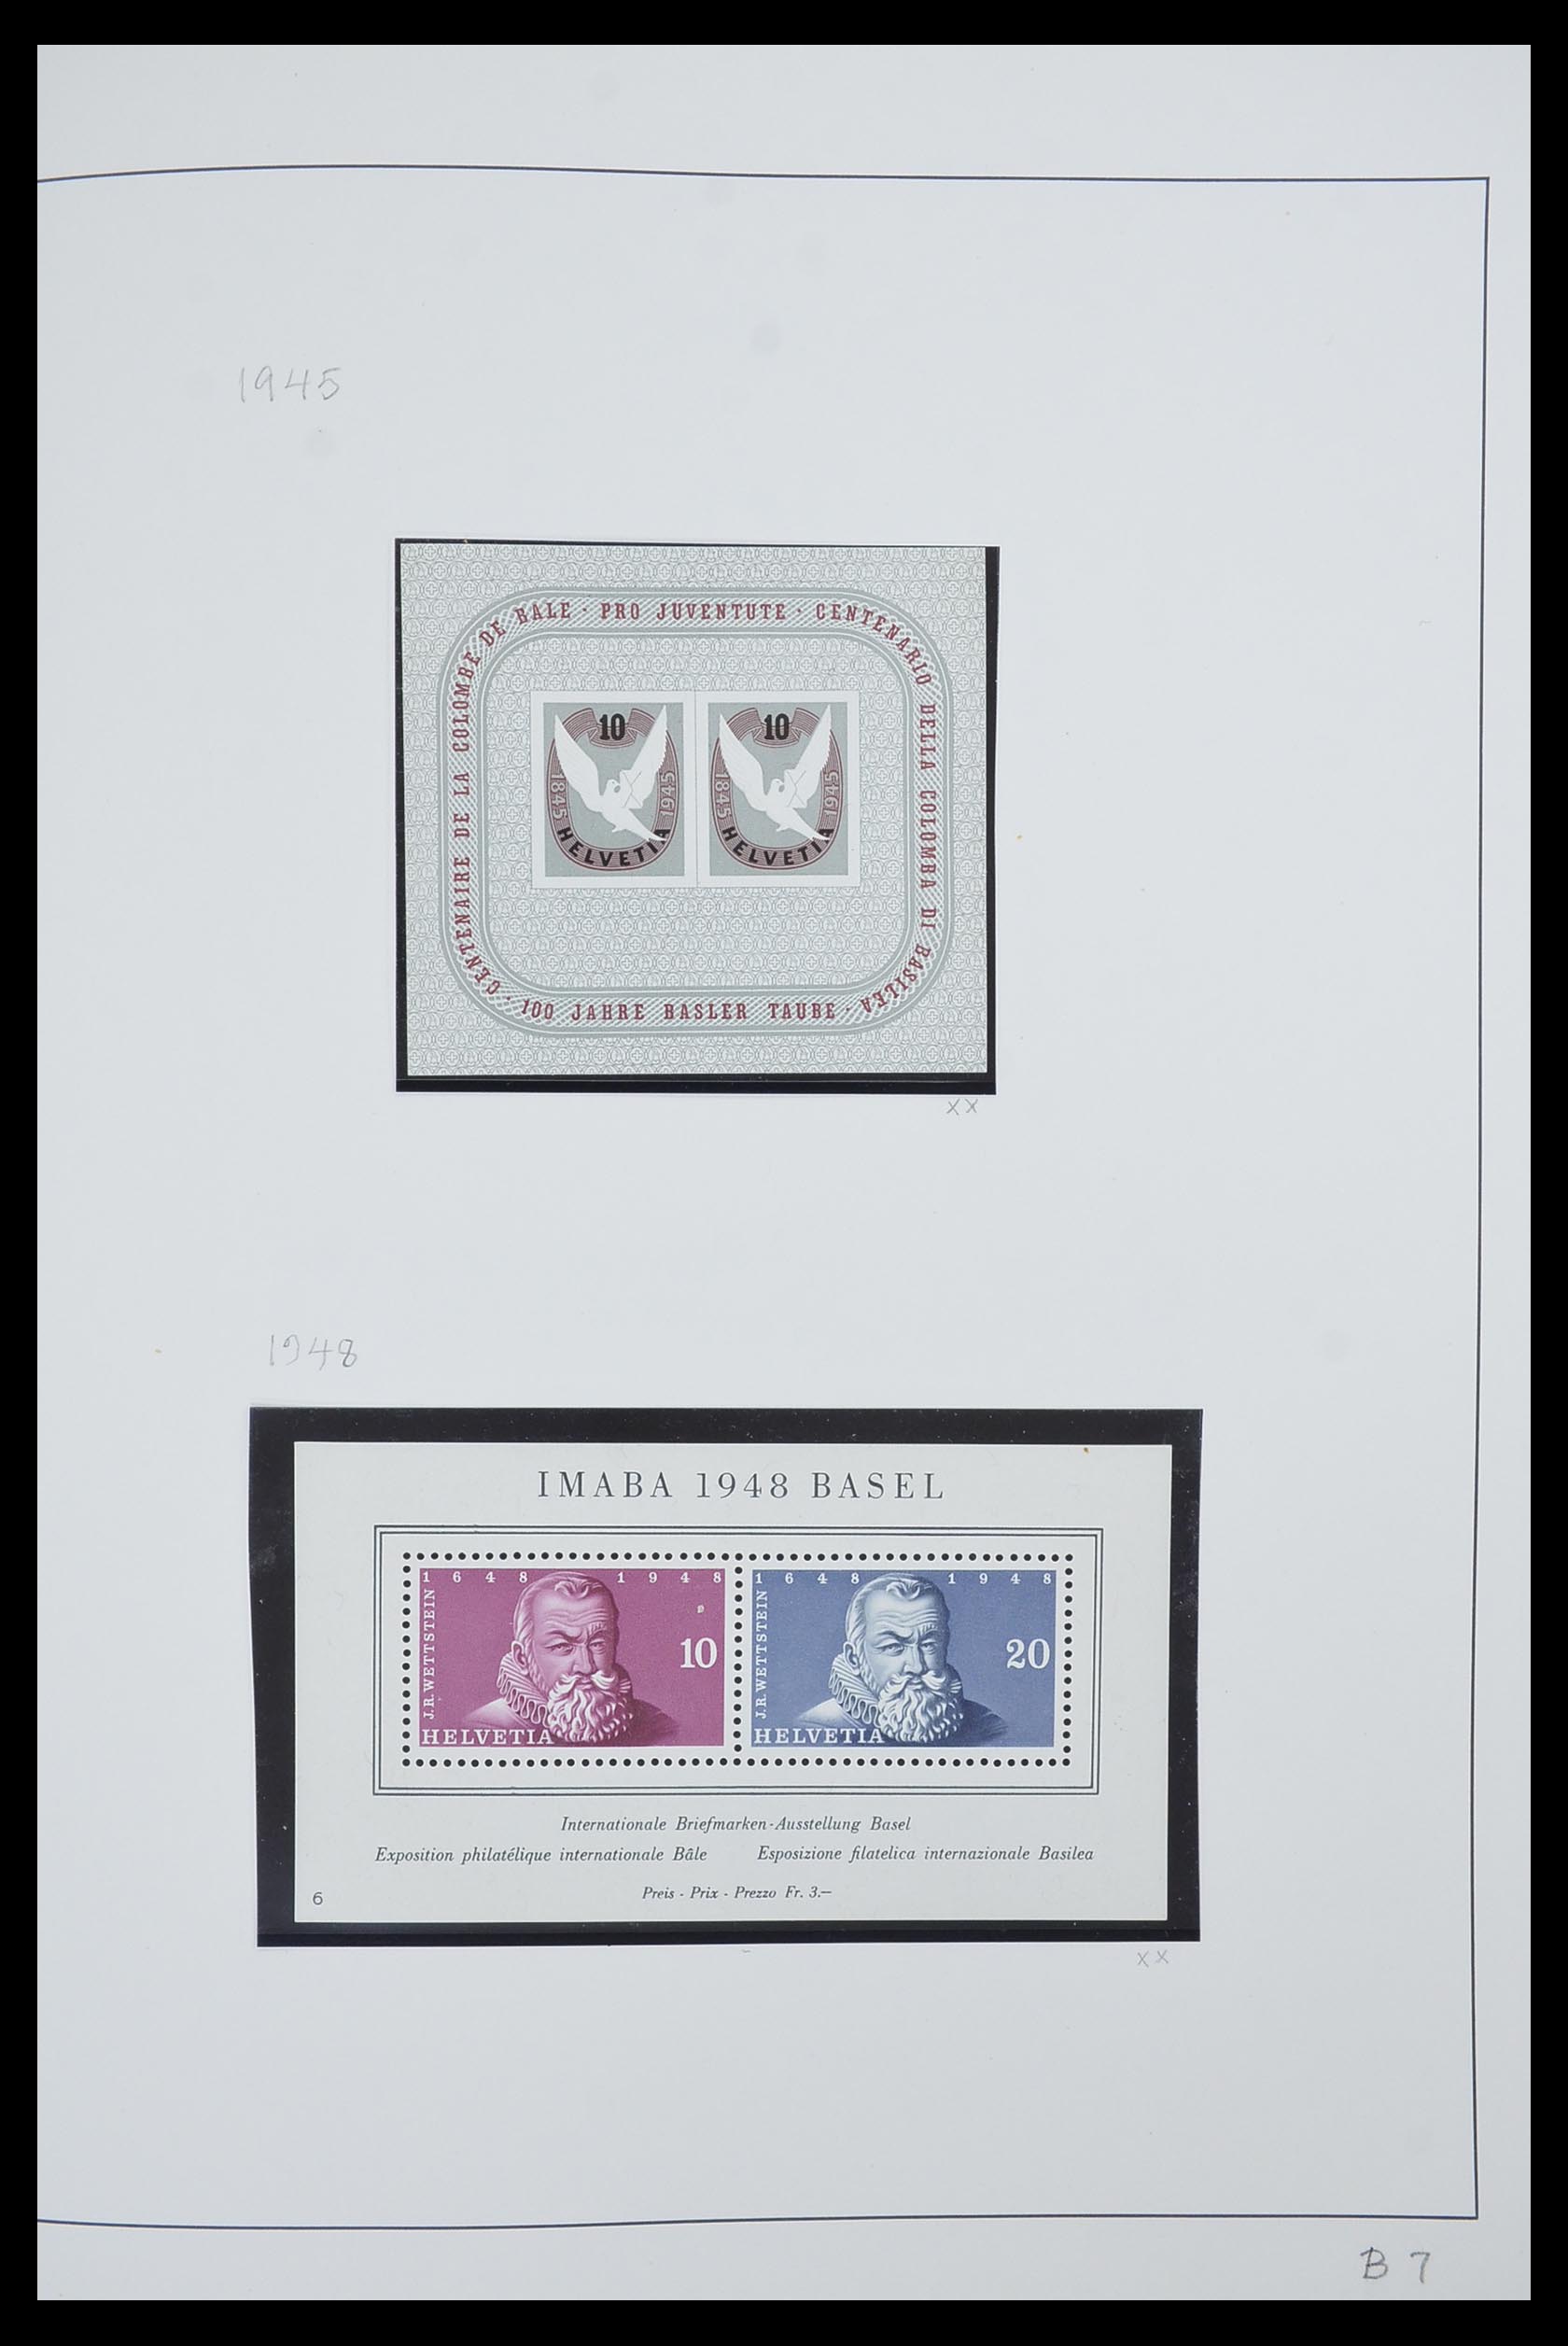 33556 142 - Stamp collection 33556 Switzerland 1862-2000.